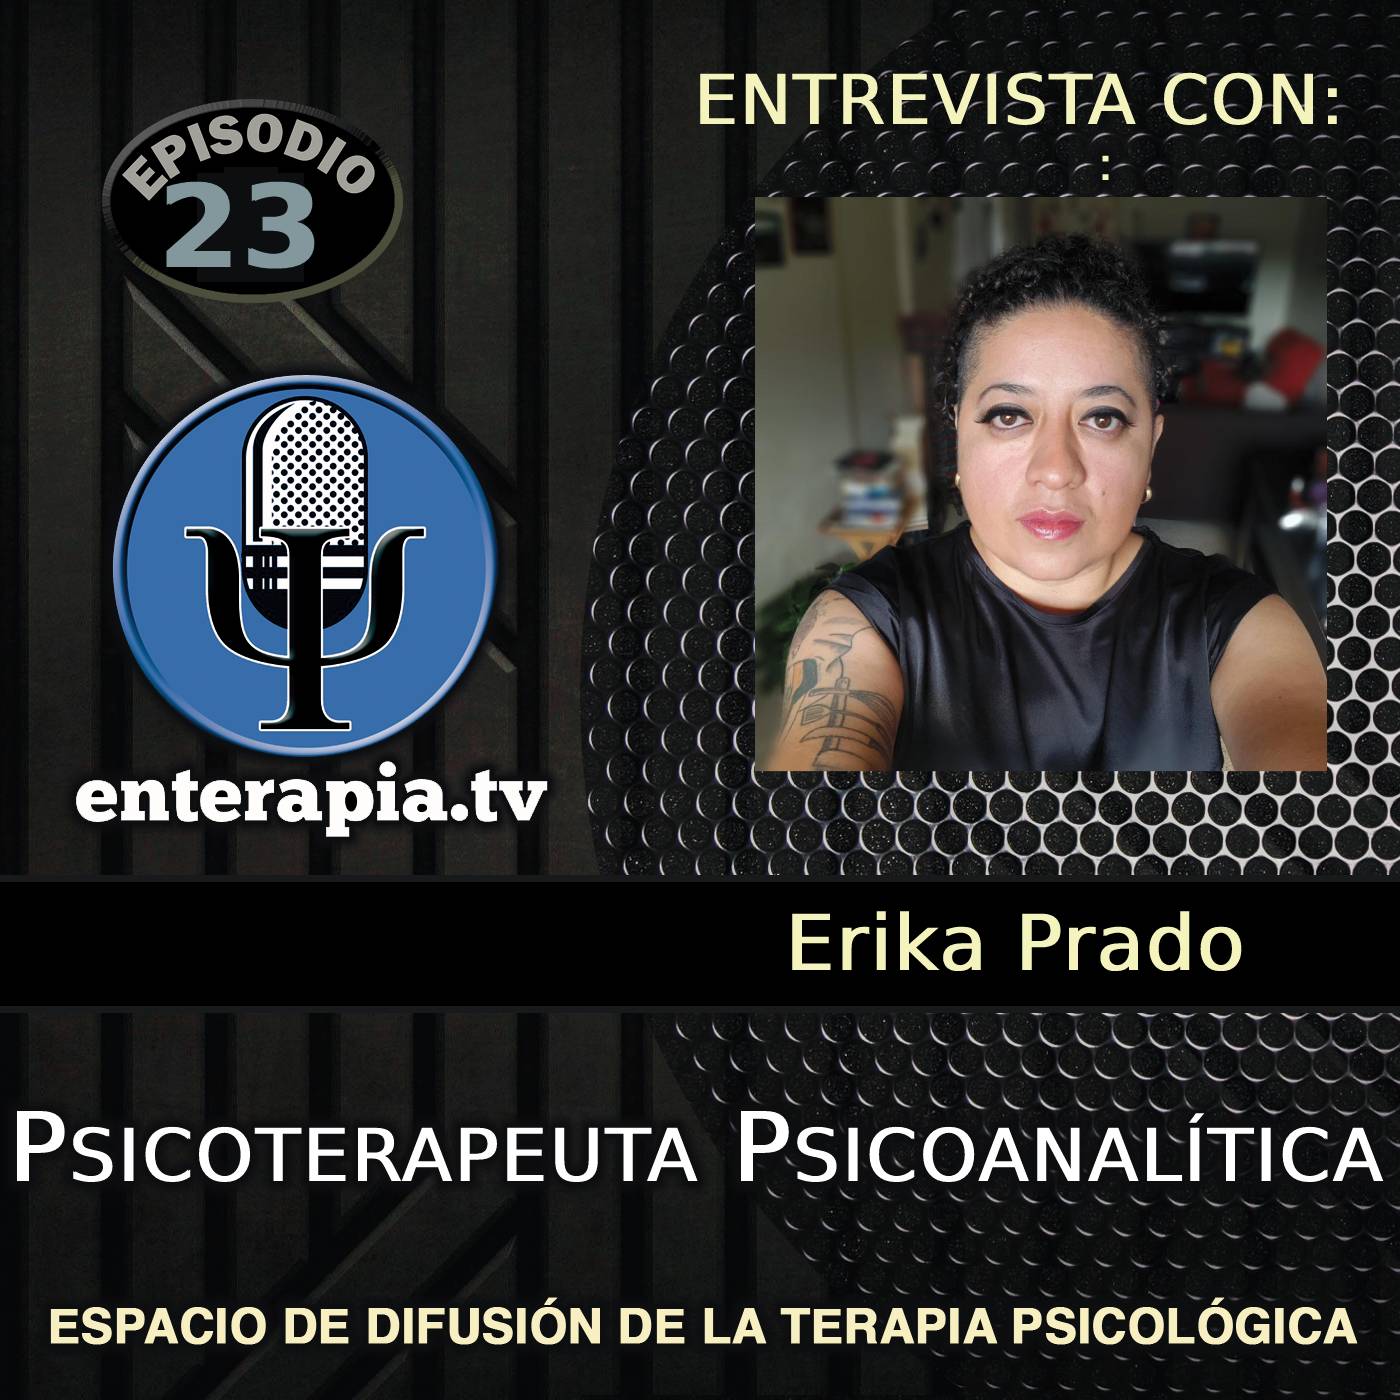 Psicoanálisis en tu vida diaria - Erika Prado